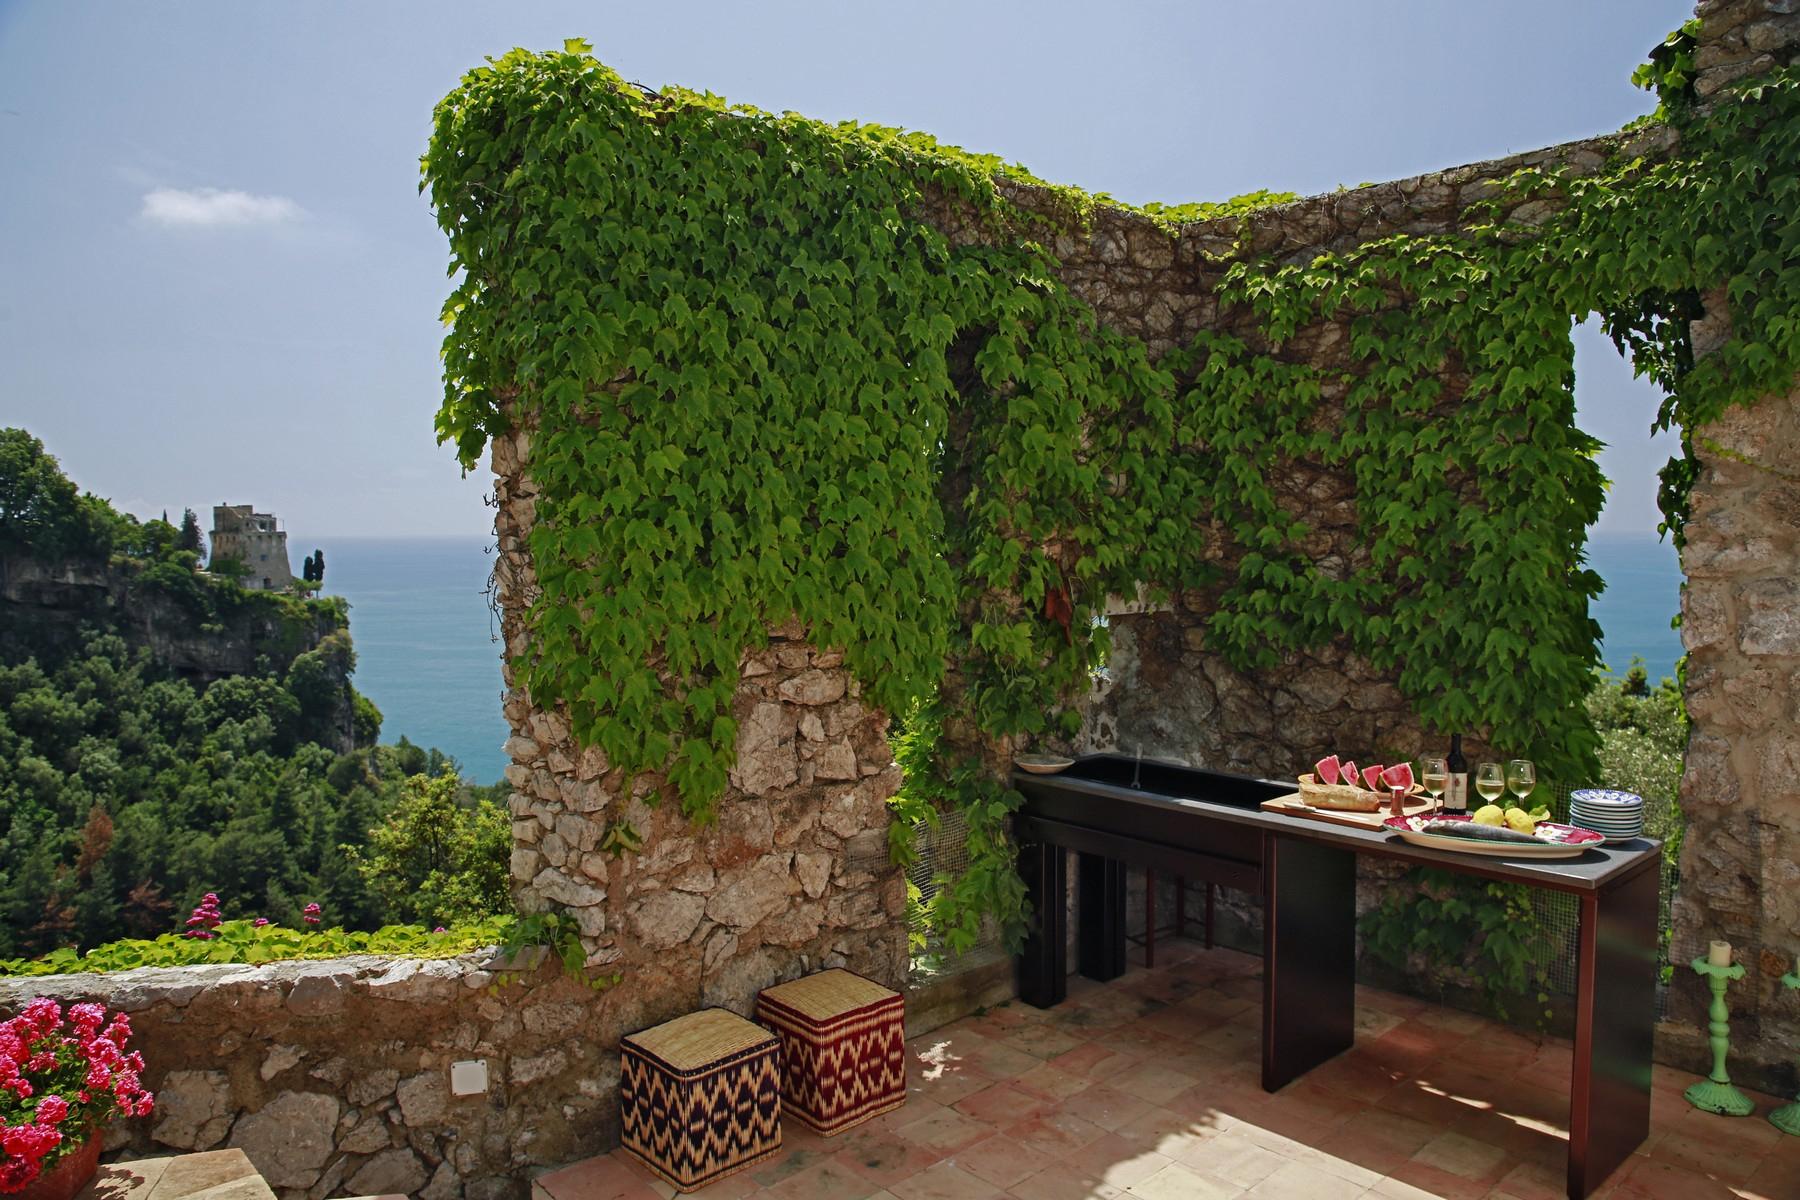 Villa pied dans l'eau on the Amalfi Coast - 17